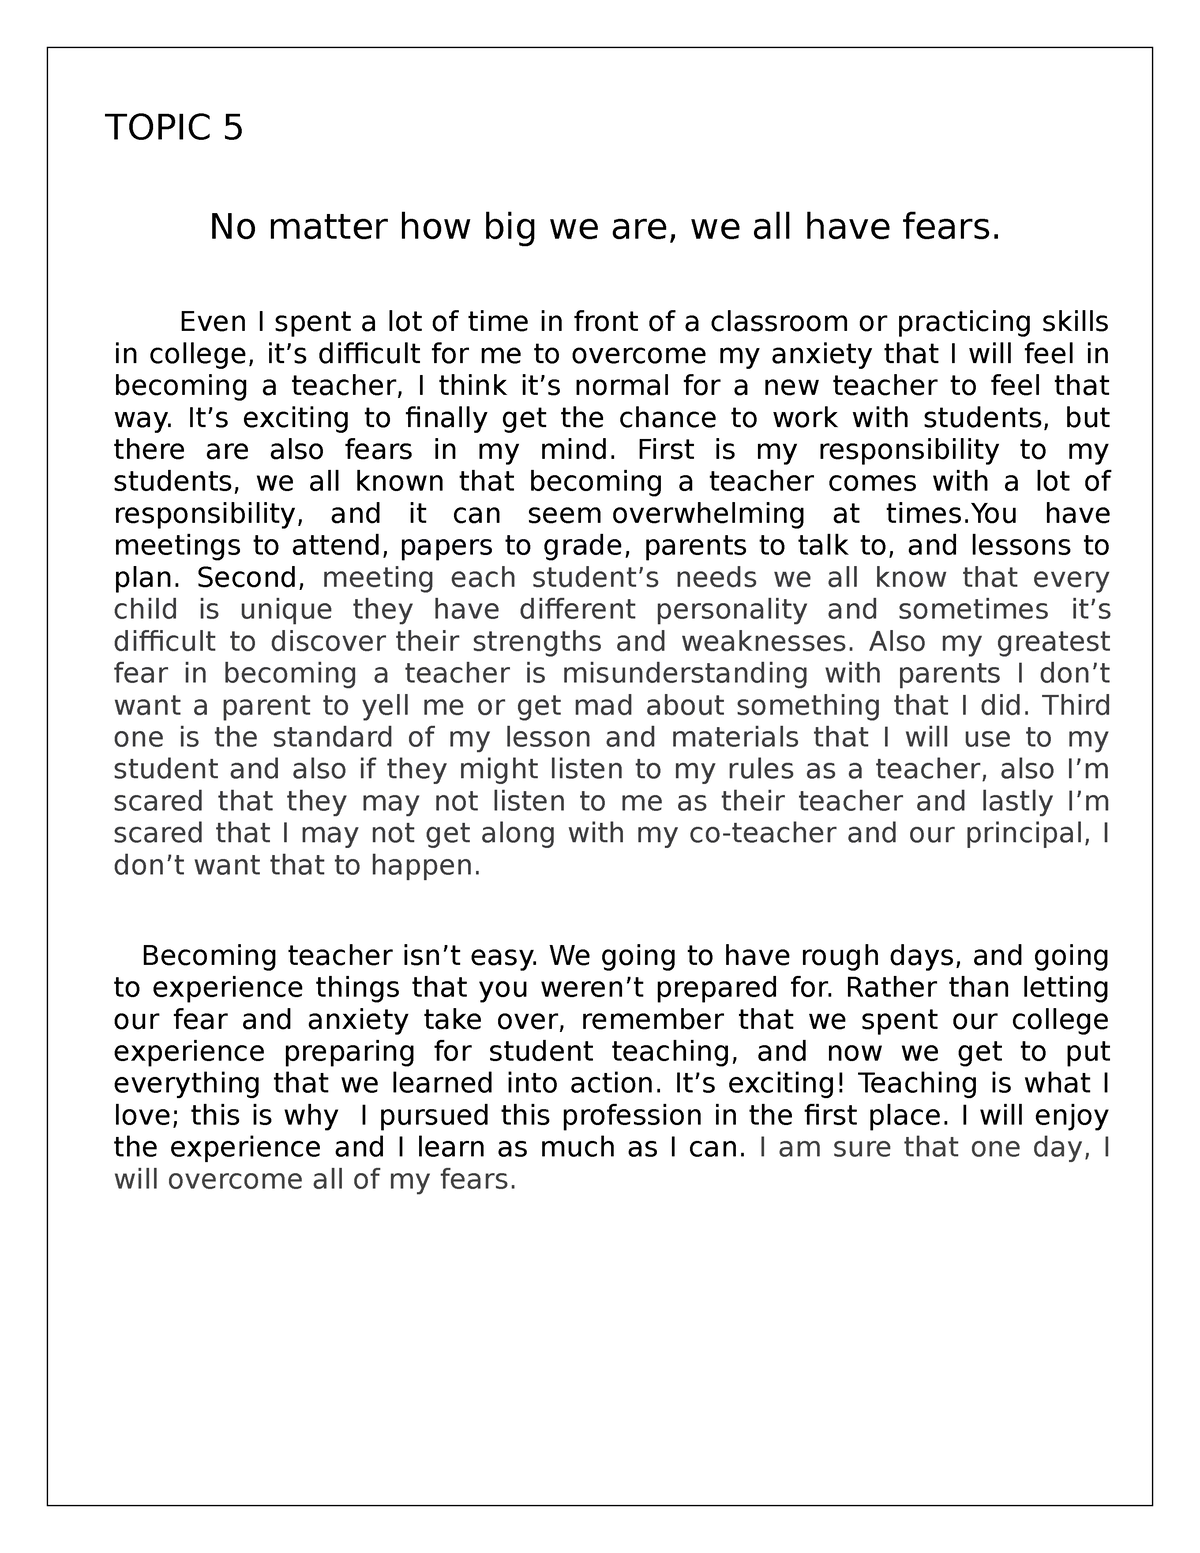 my fears essay